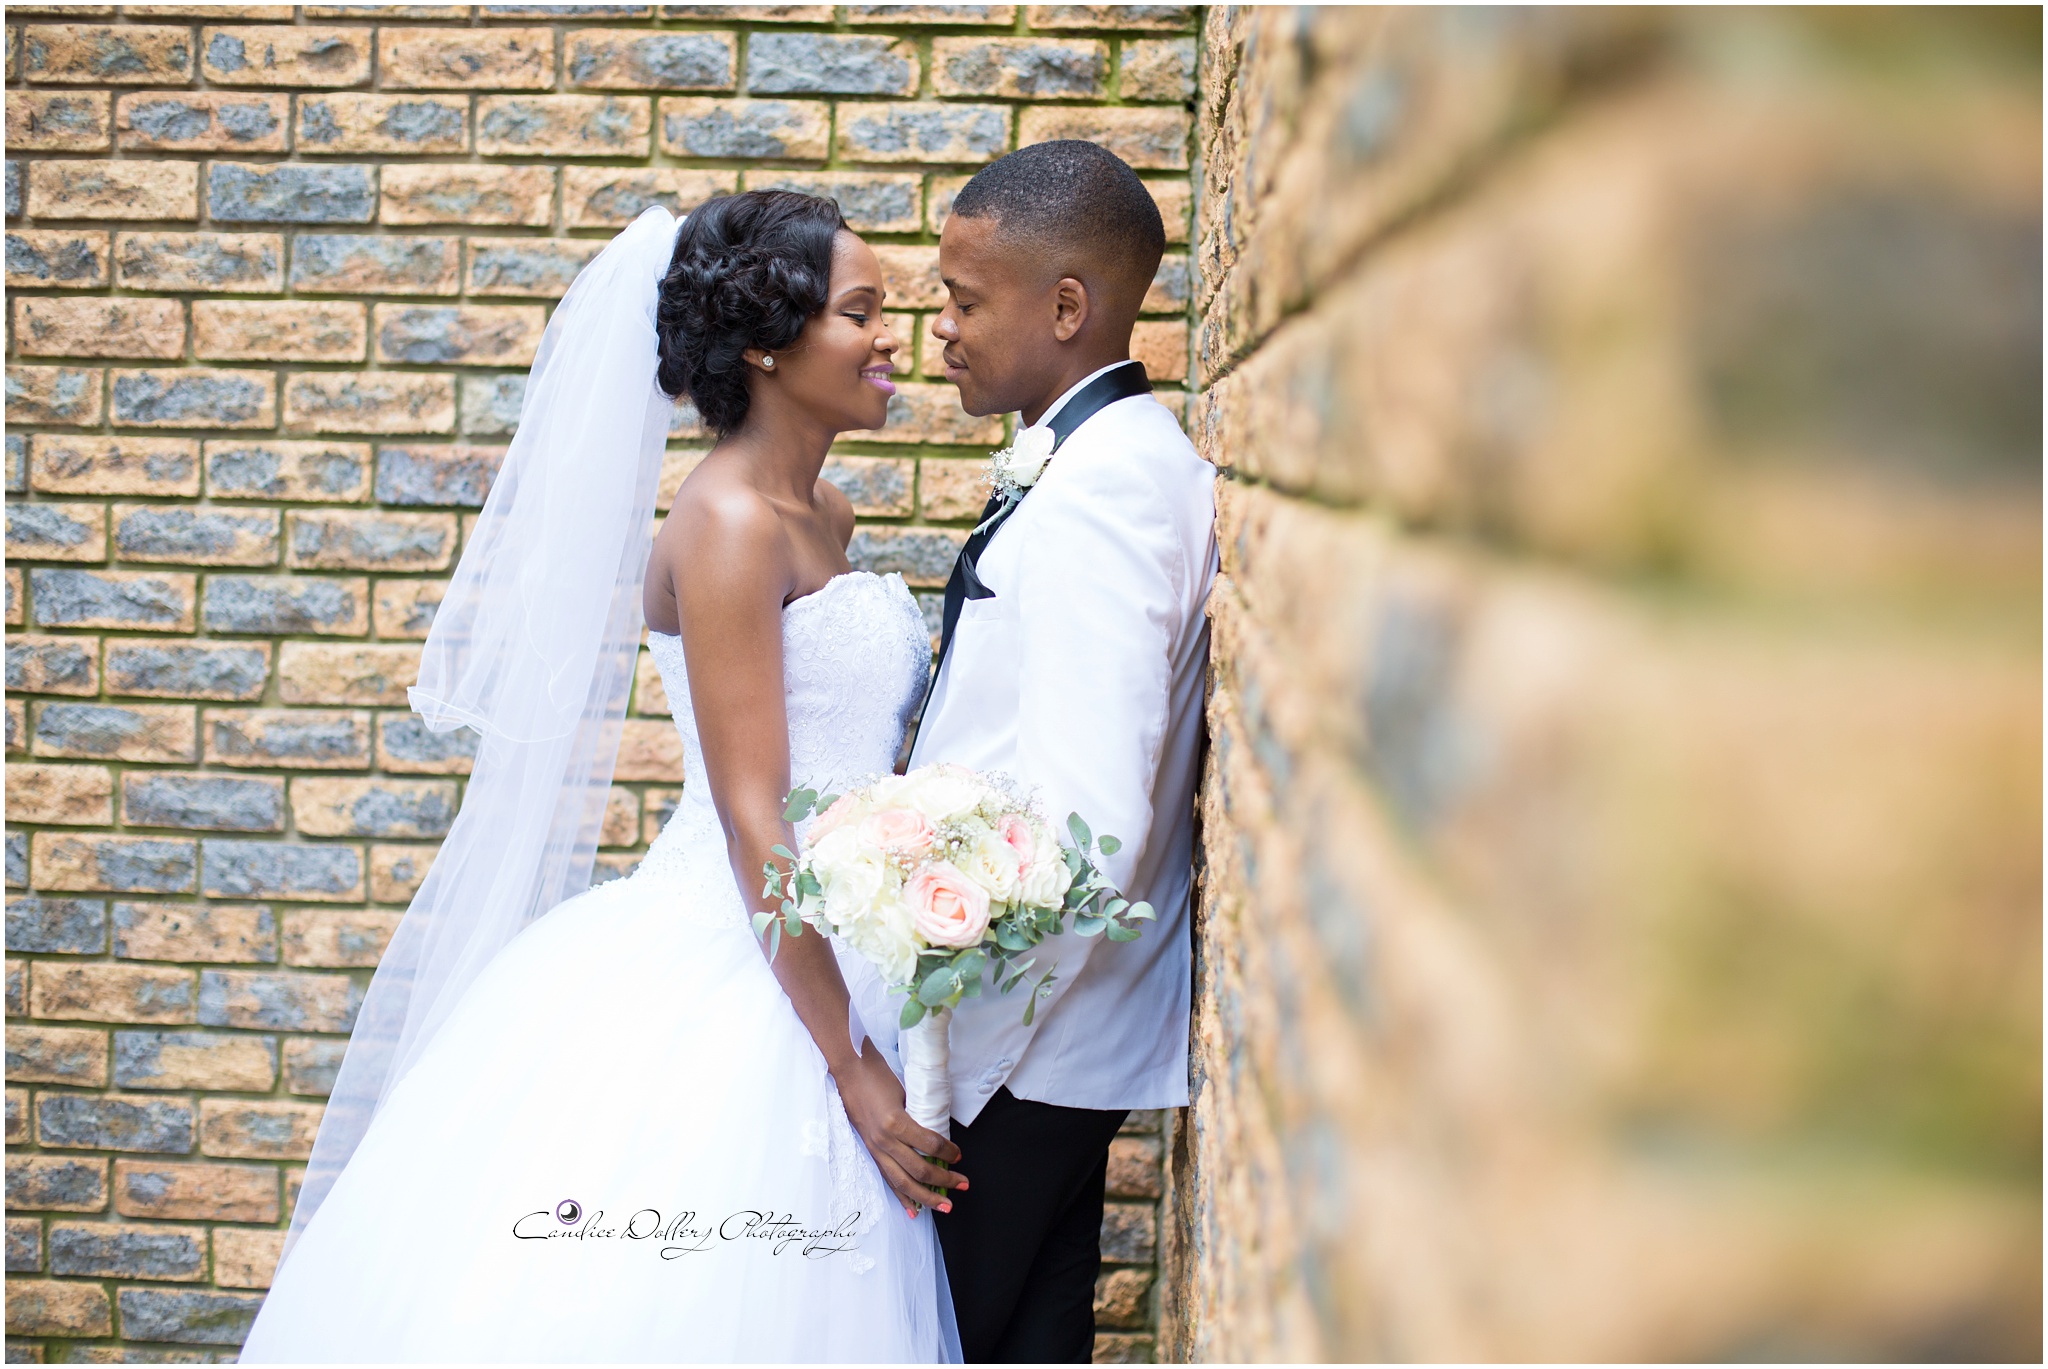 Asanda & Bonga's Wedding - Candice Dollery Photography_8236